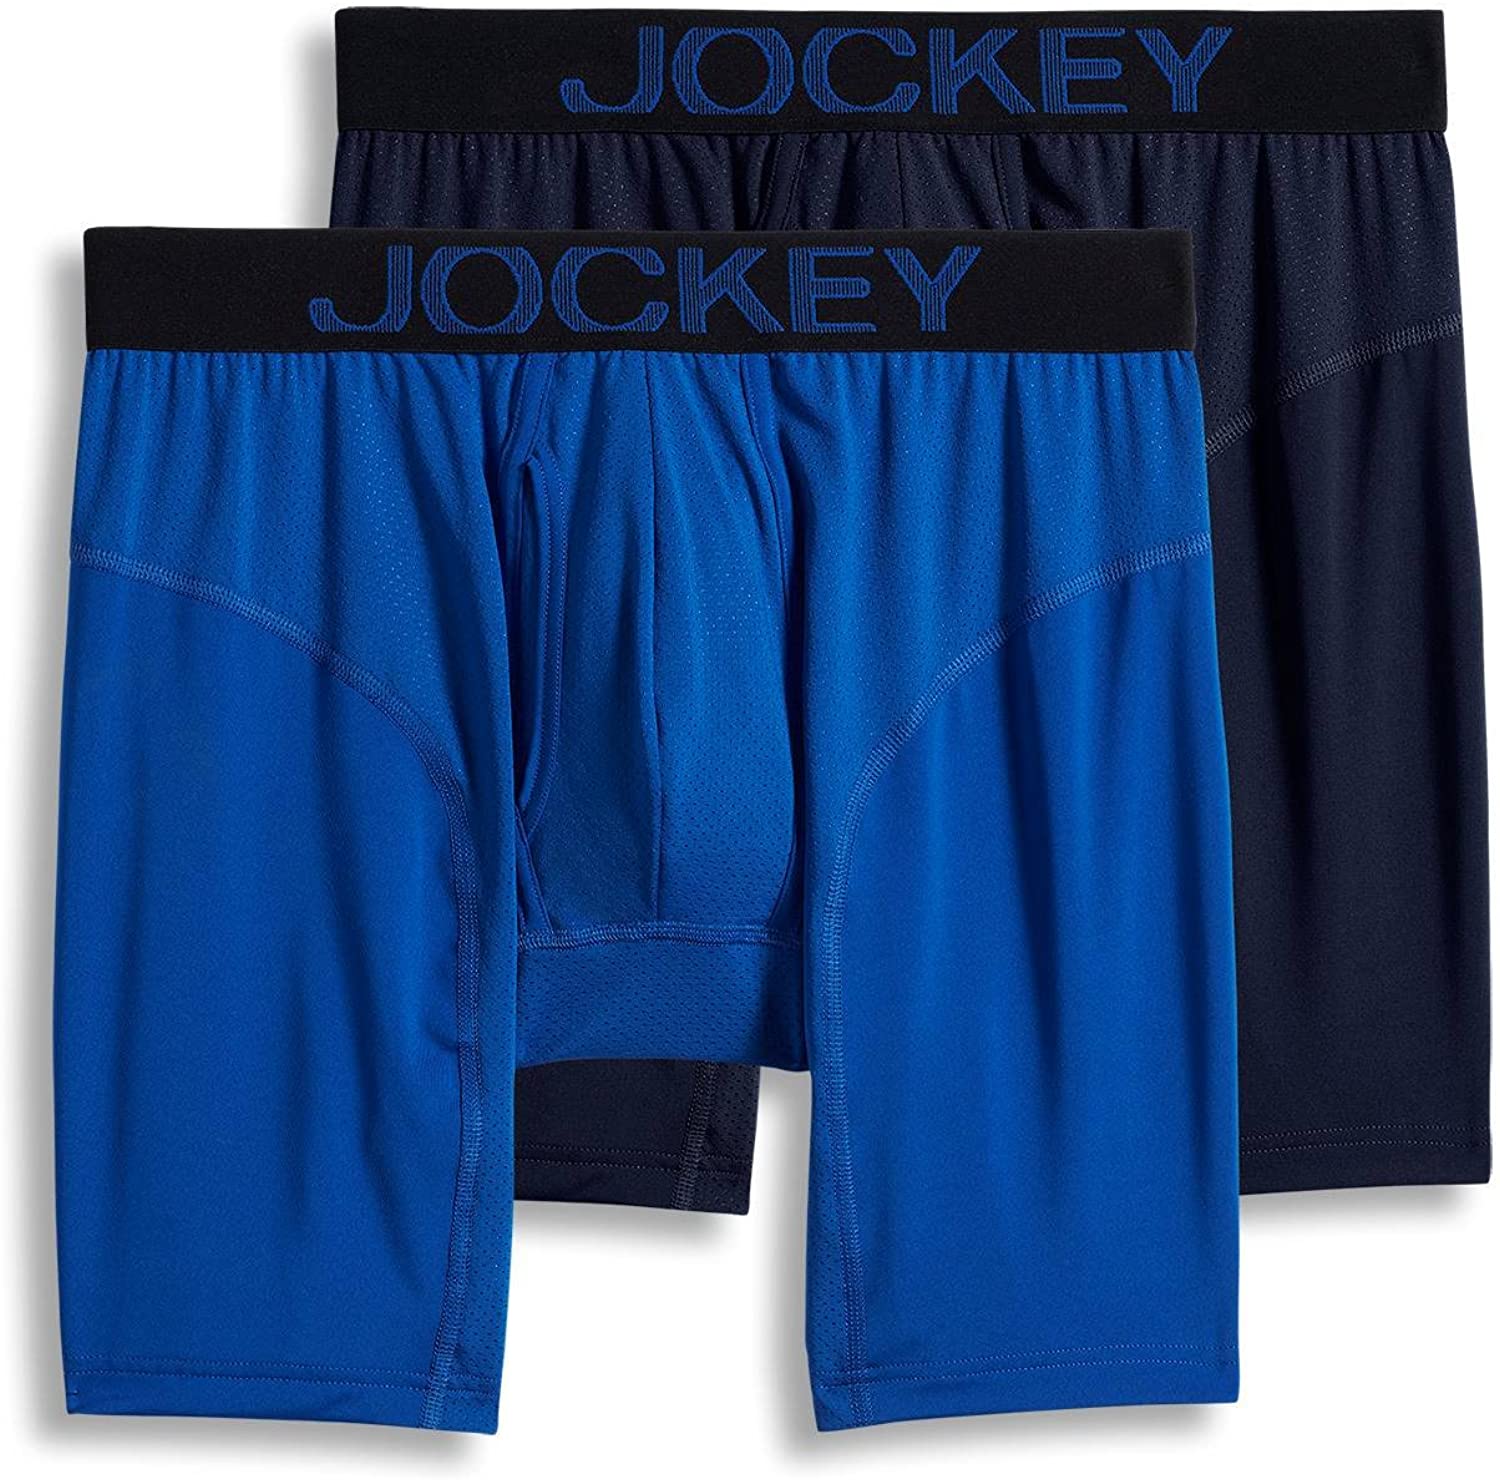 Jockey Men's Underwear RapidCool Midway Brief 2 Pack 